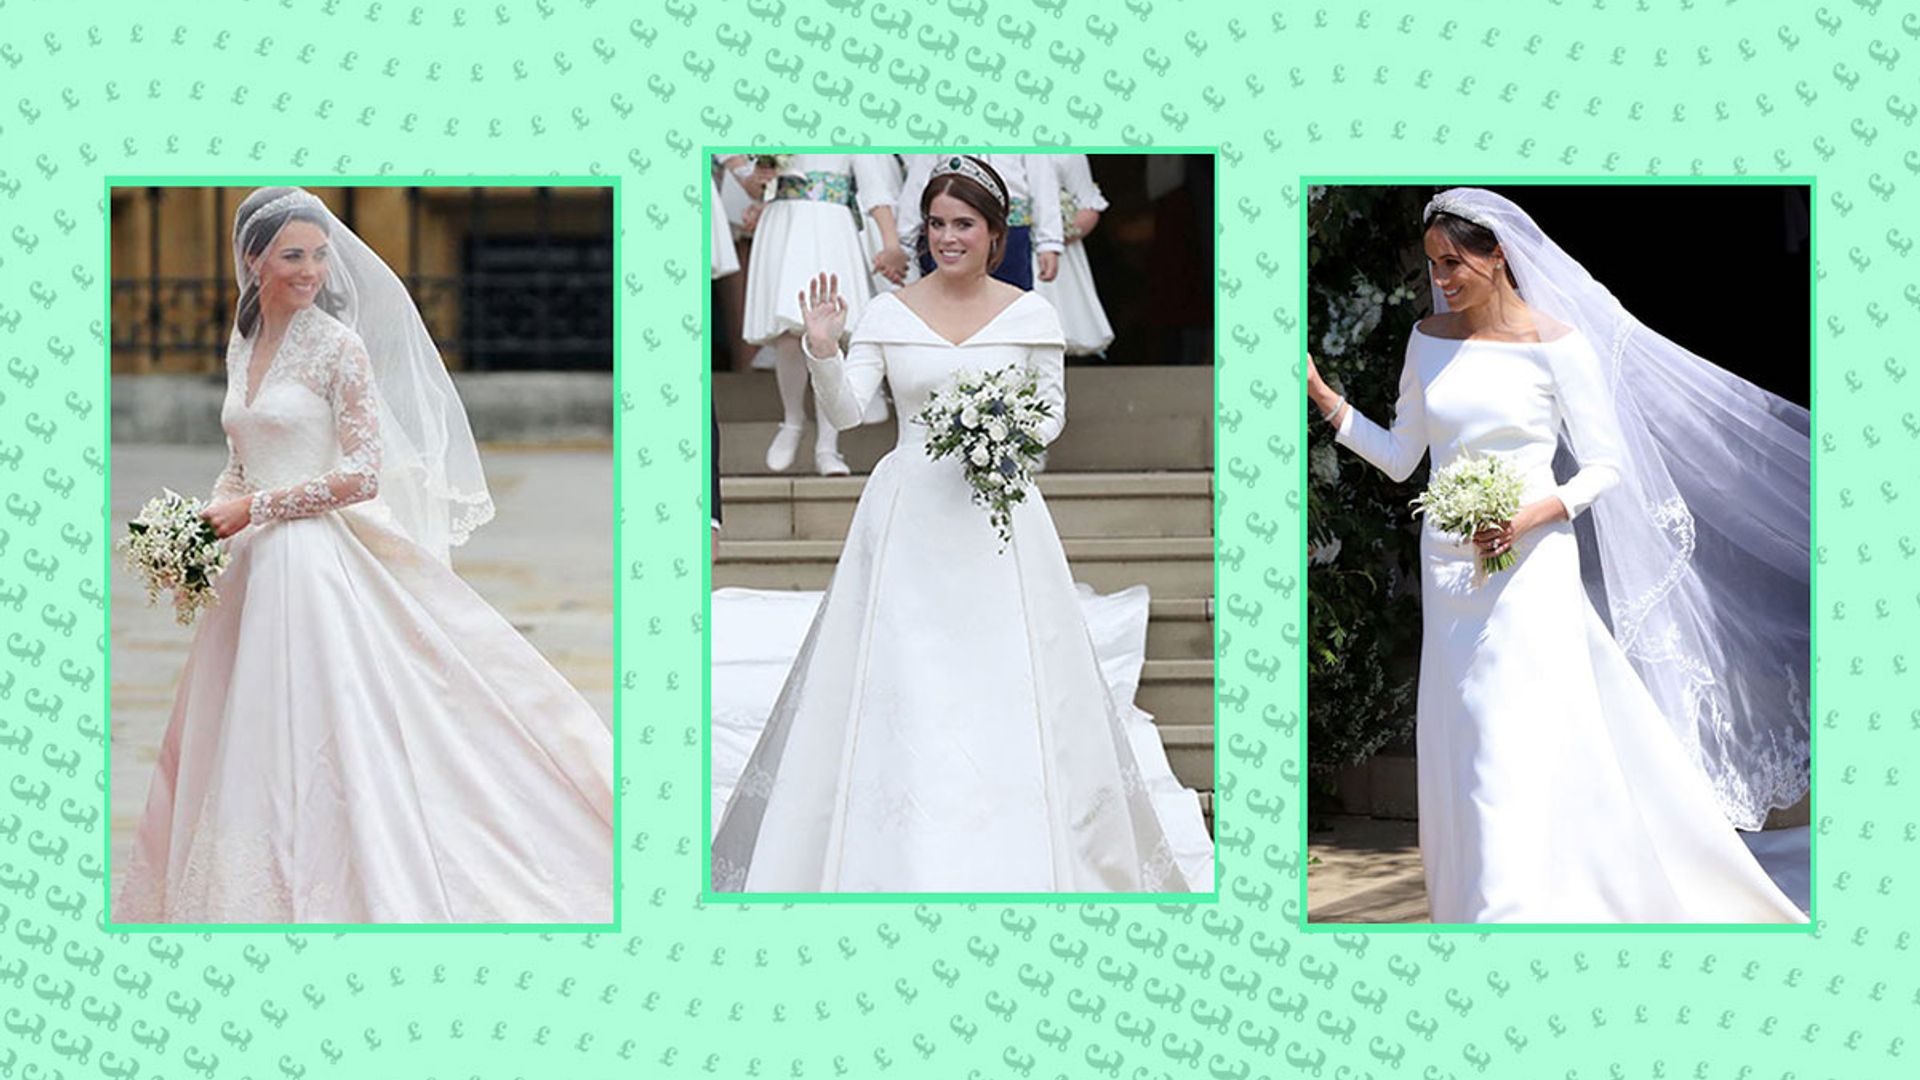 Meghan Markle's Wedding Dress Photos - Details for Meghan's Givenchy Royal Wedding  Dress